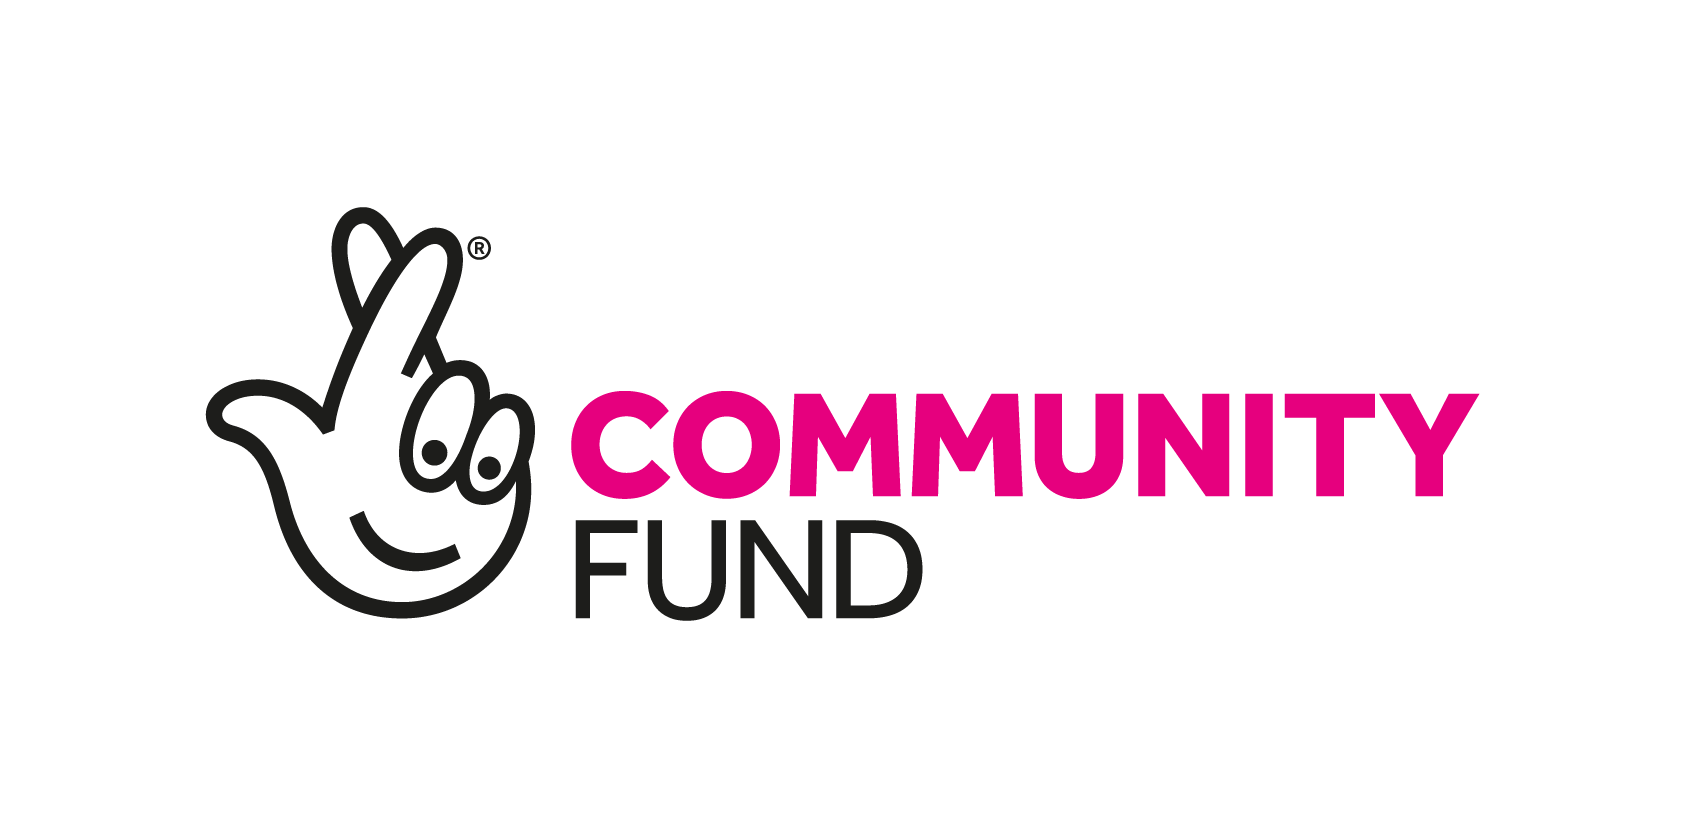 National Community Fund